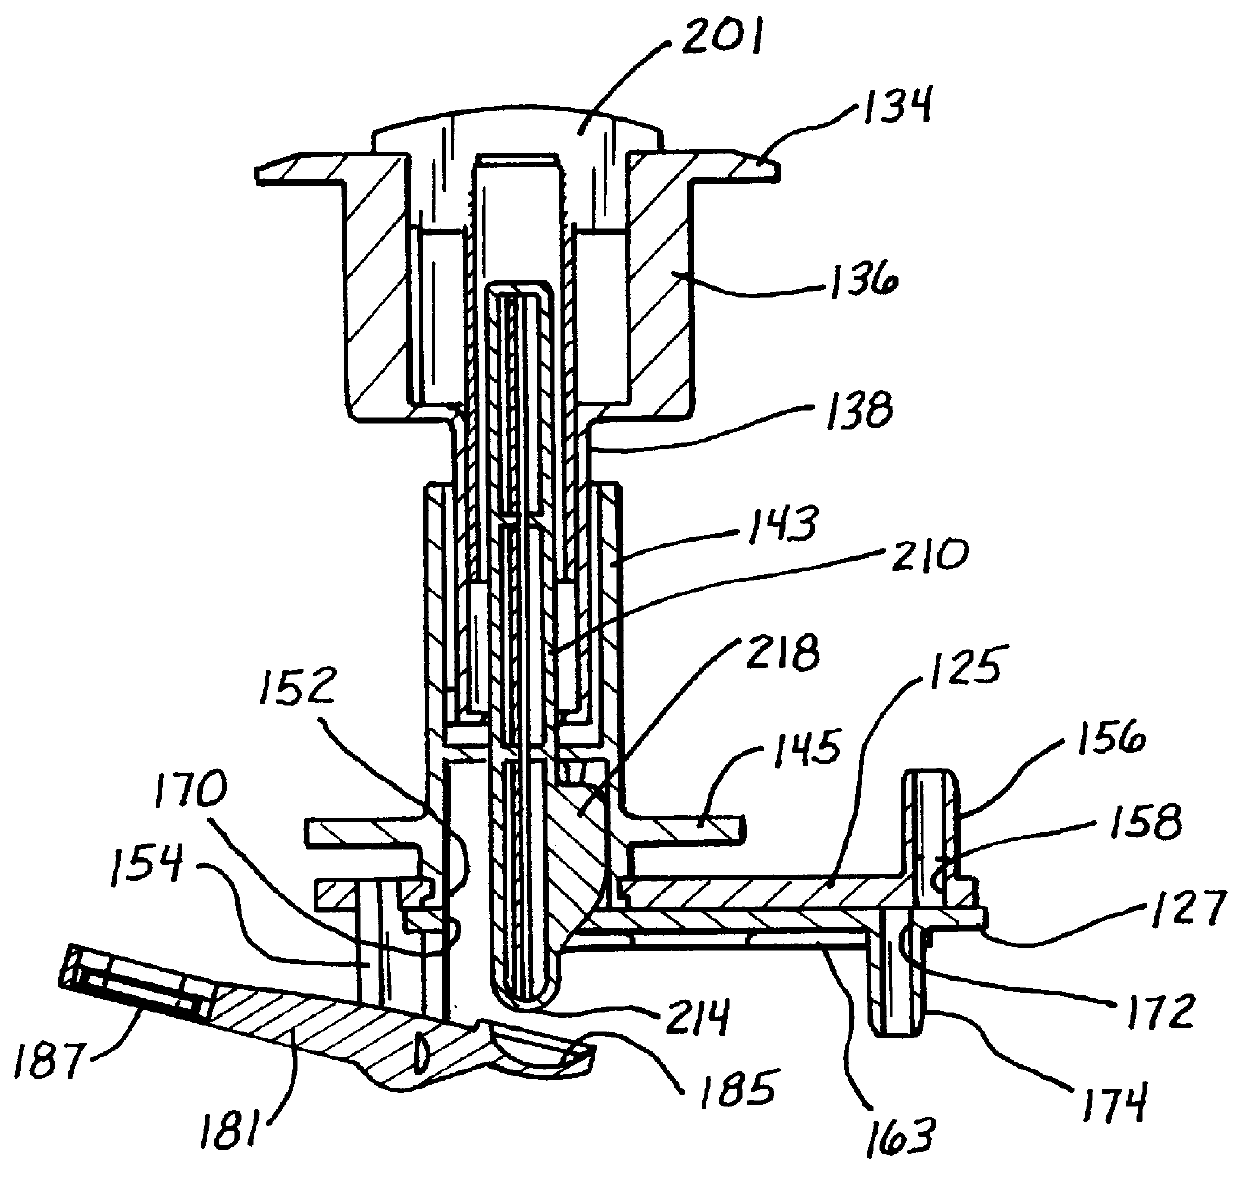 Dual-flush valve